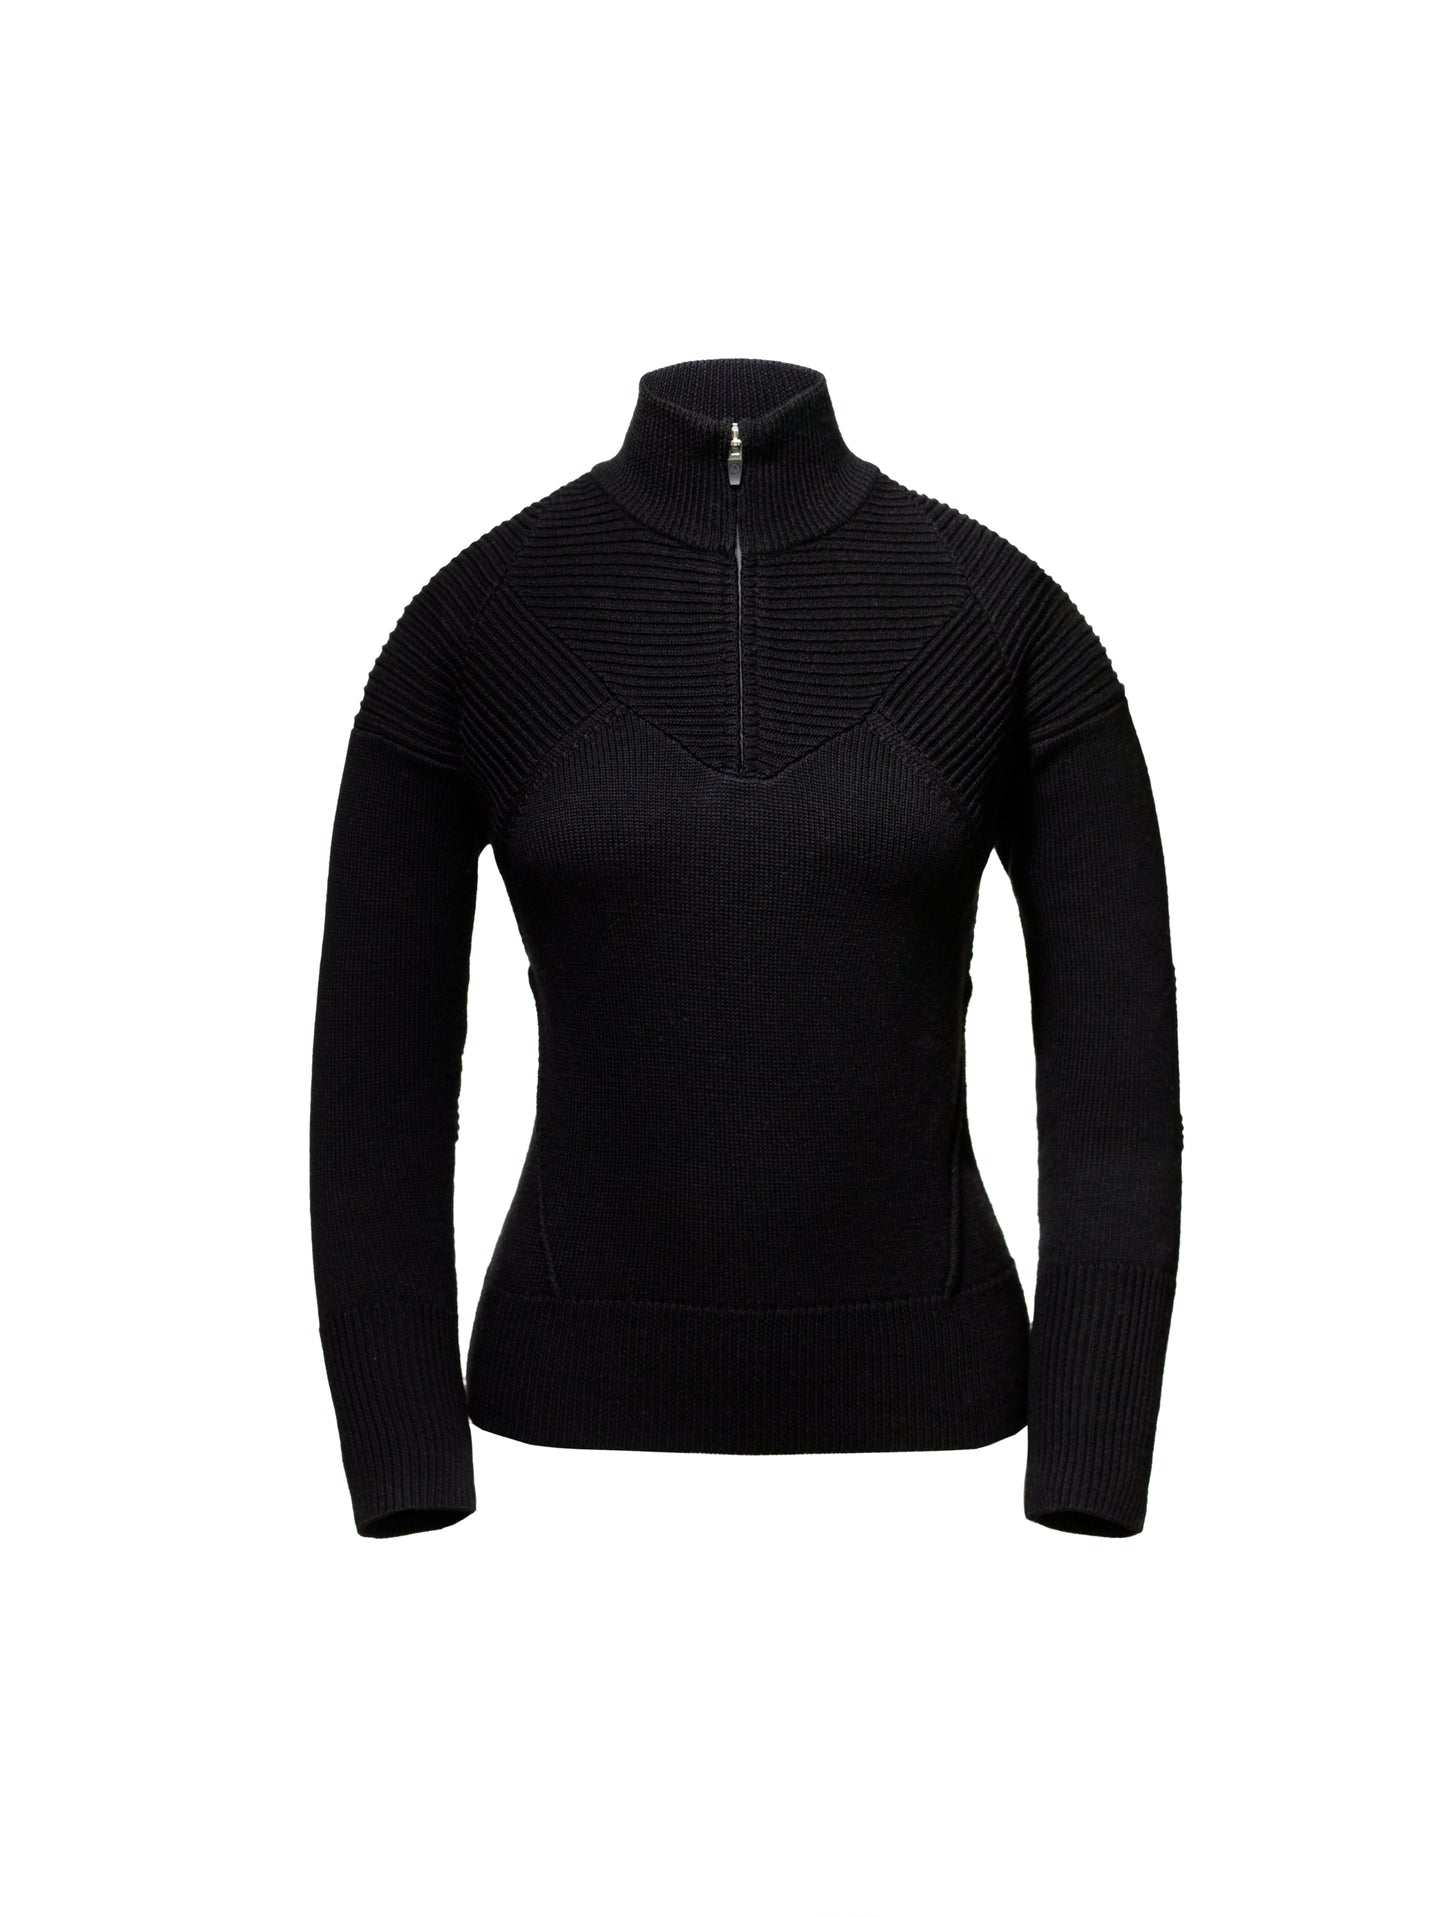 W Merino Half-Zip Sweater - Jet Black